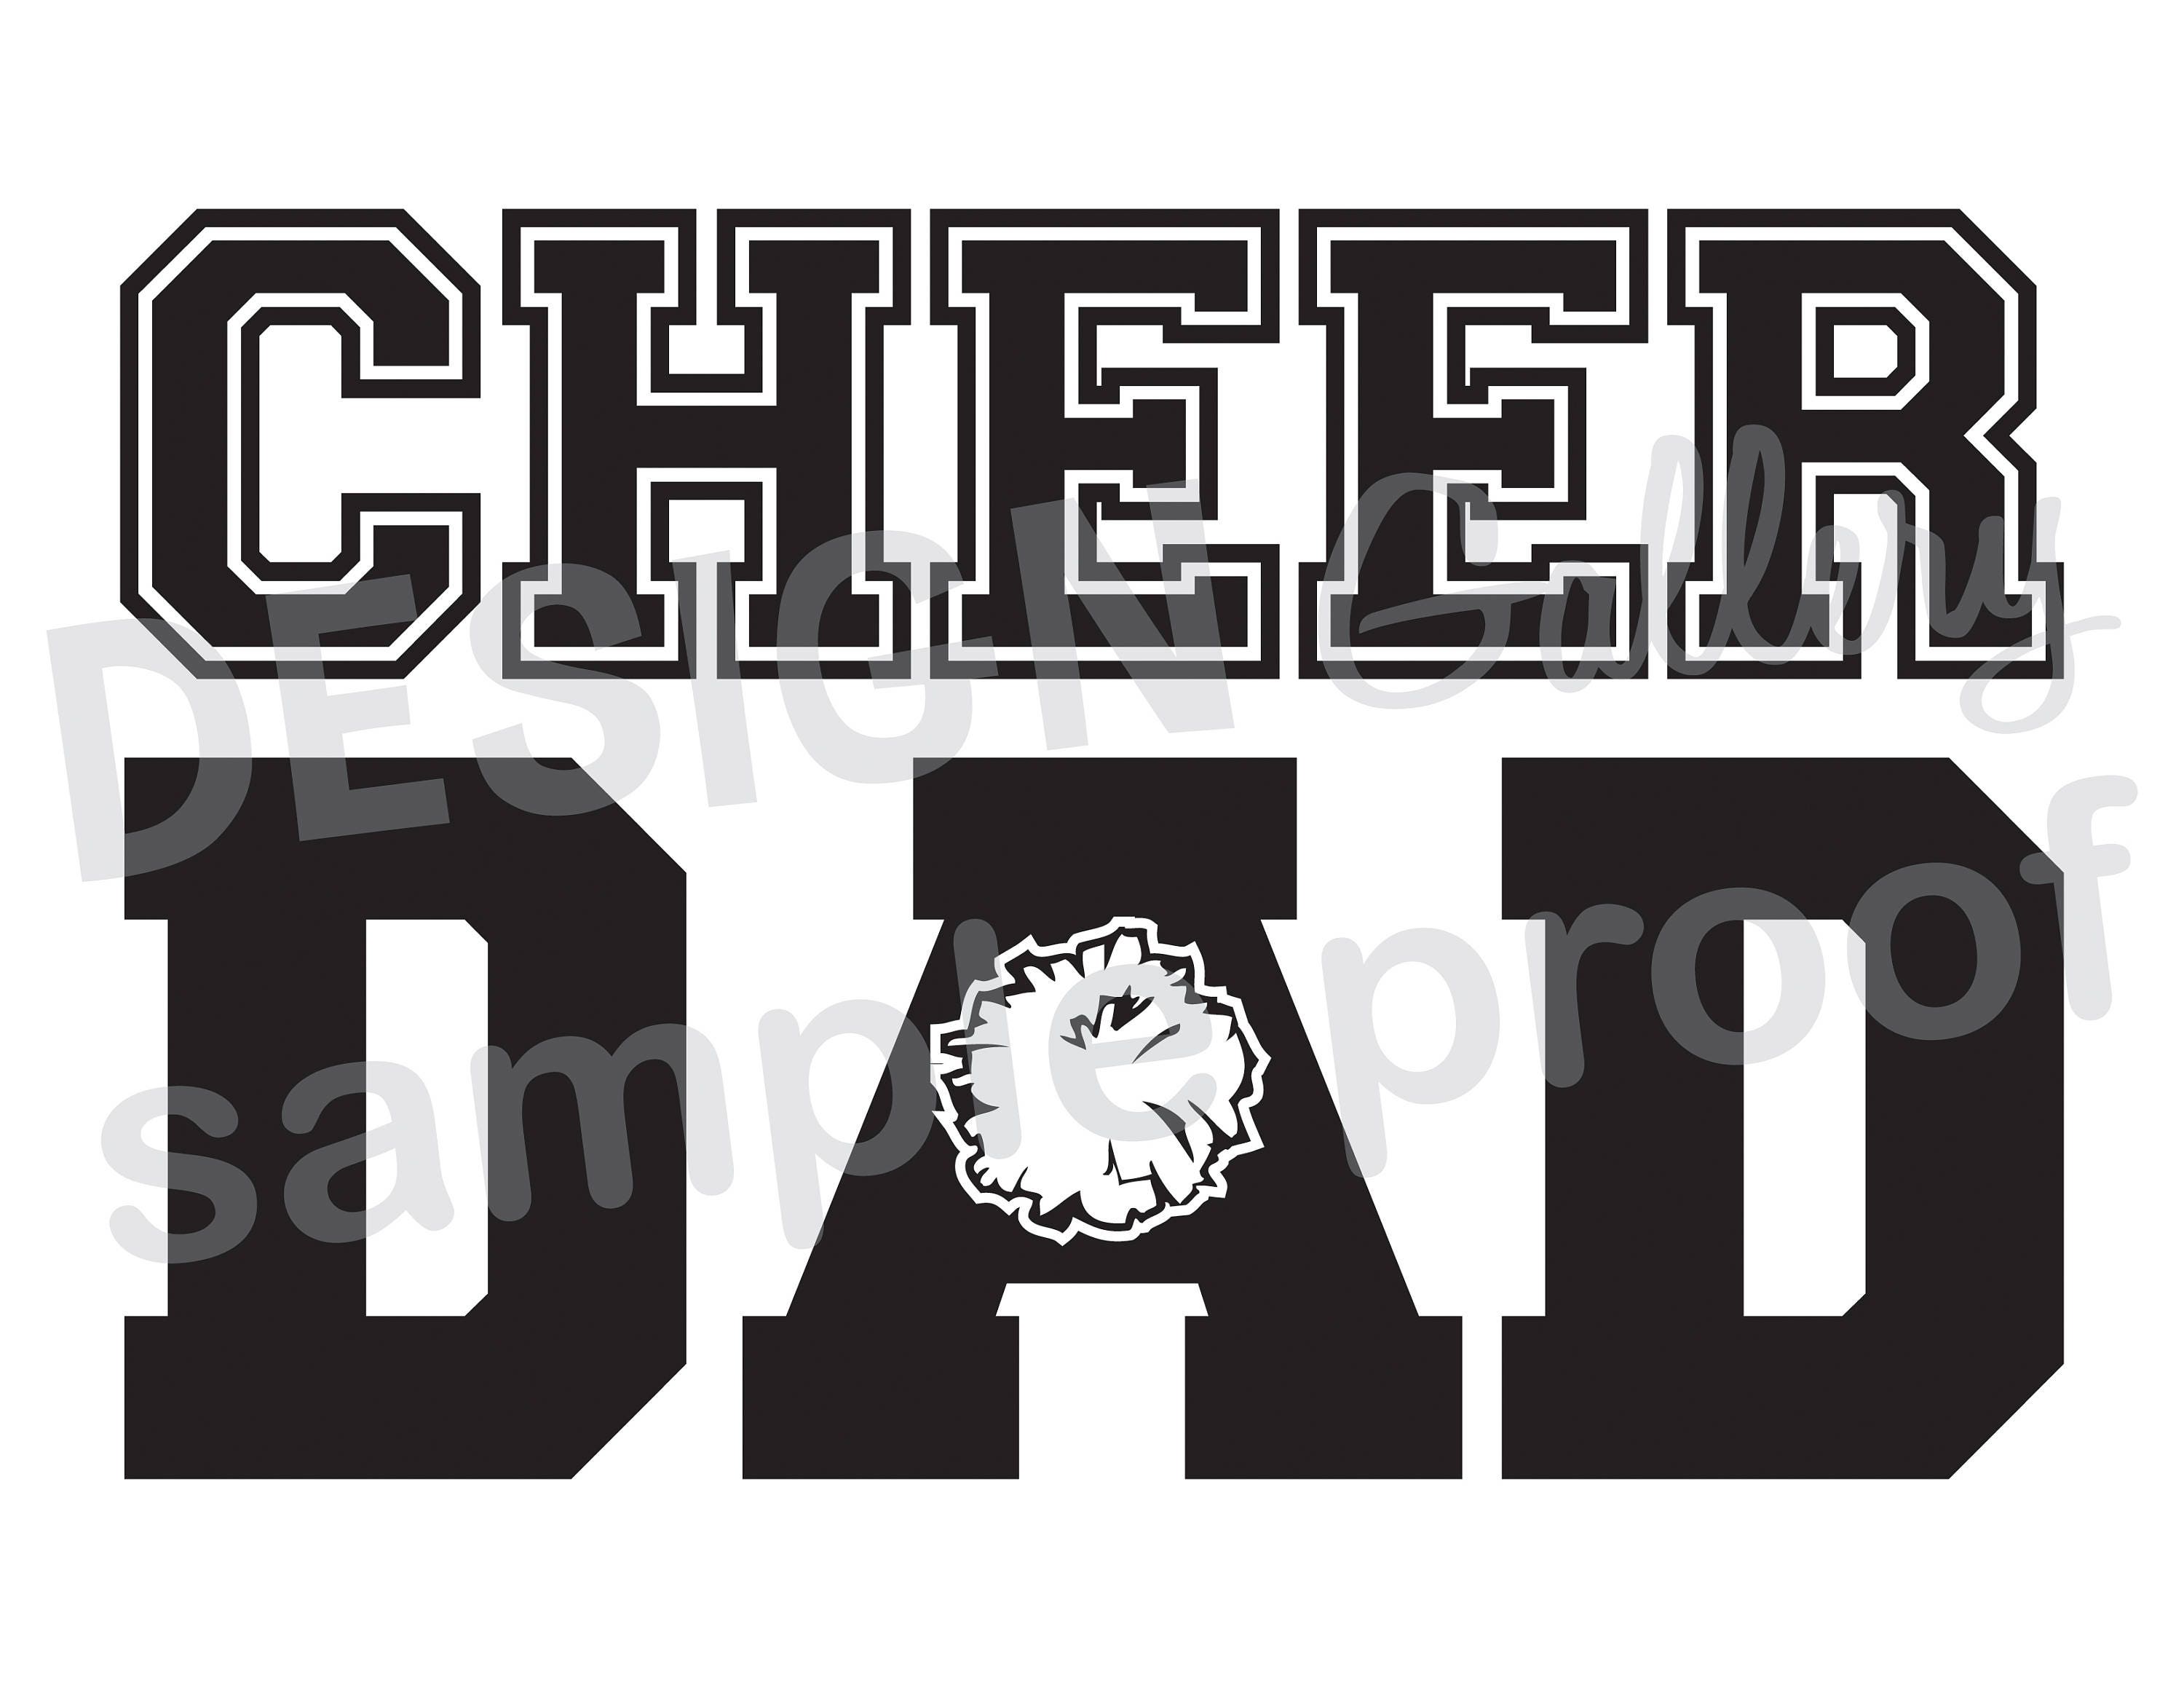 Cheer Dad DIY Instant Download JPG image & SVG cut